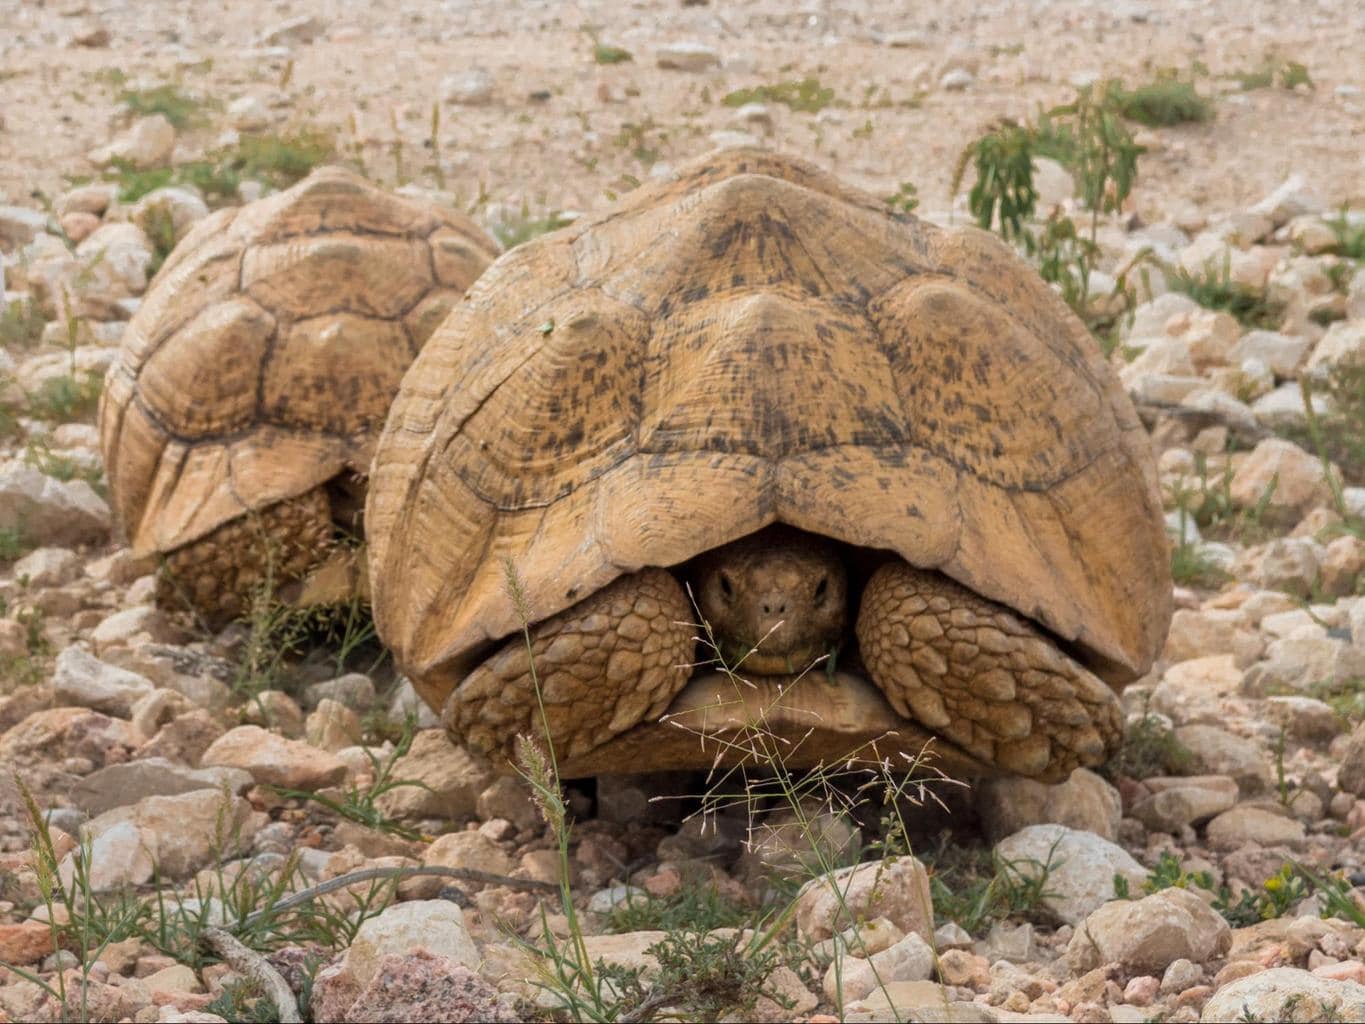 Leopard tortoise in Somaliland